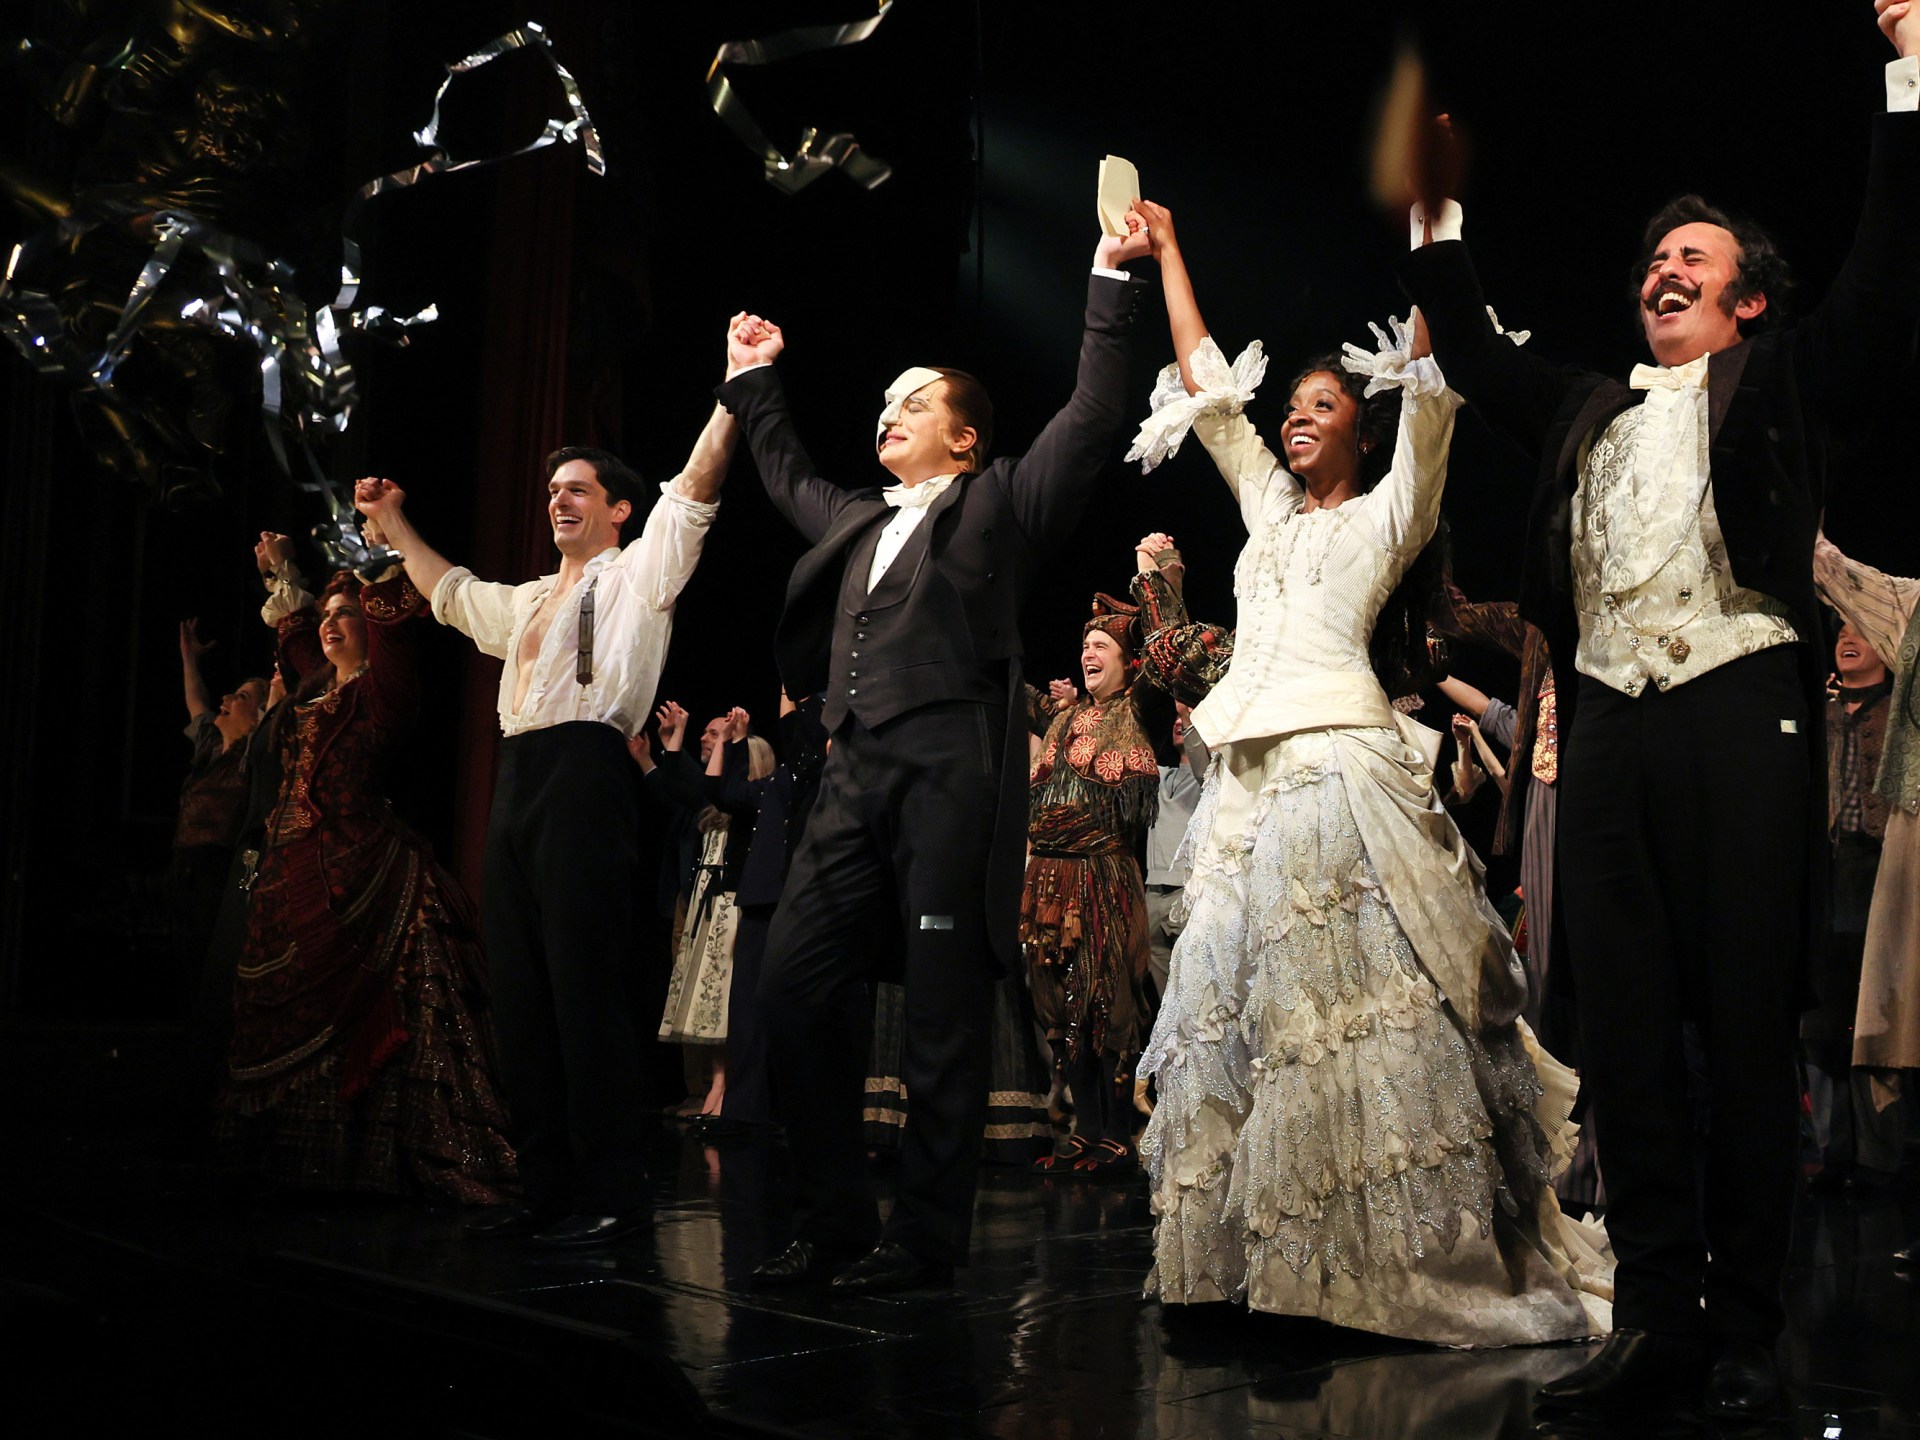 Foto: Phantom of the Opera Mengakhiri Pertunjukan Broadway 35 Tahun |  Seni budaya